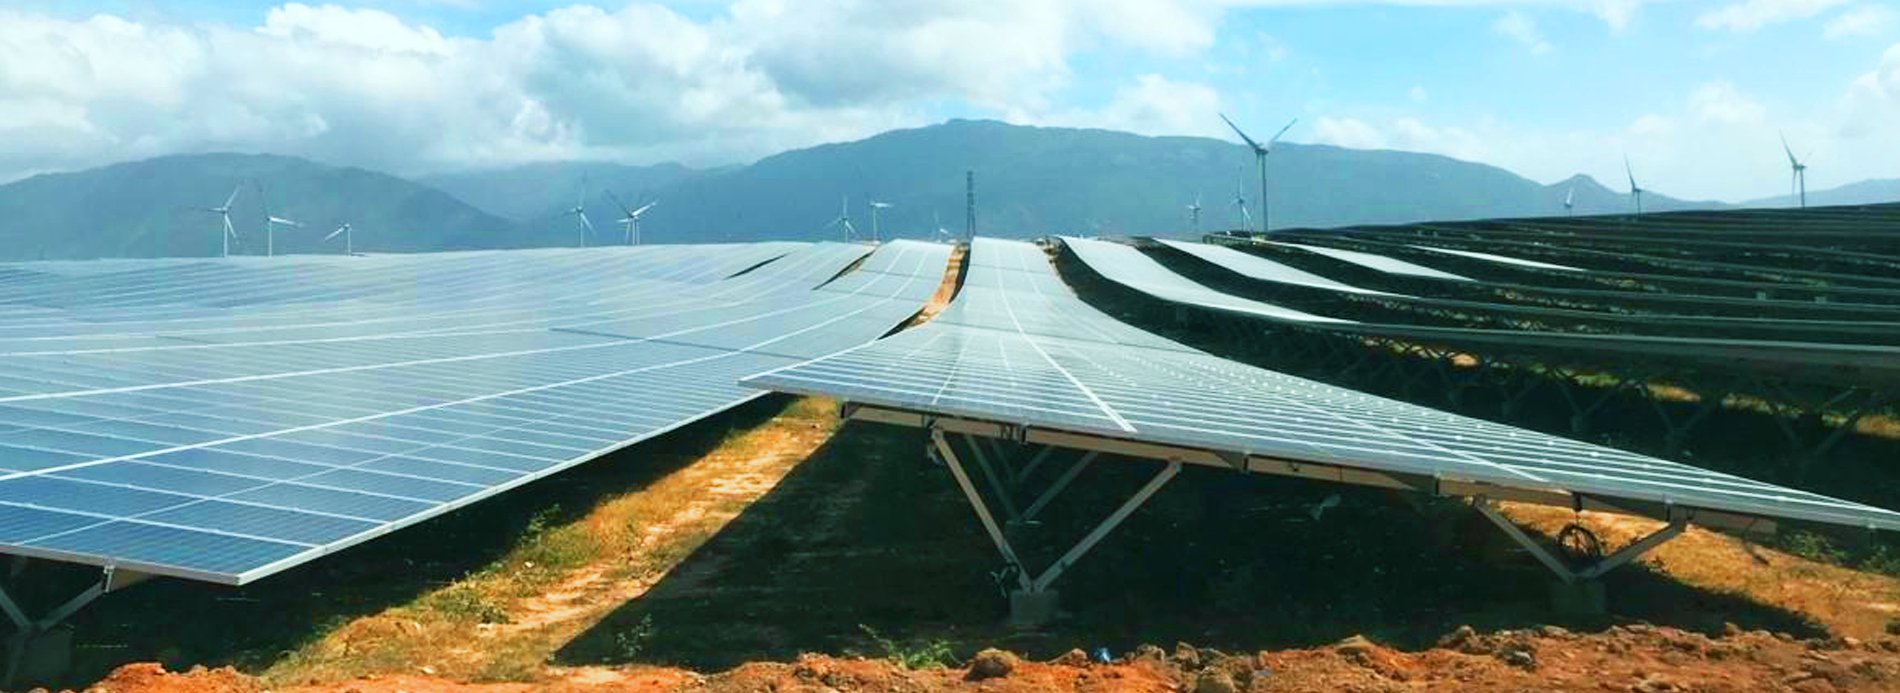 Xuan Thien Ea Sup 4 solar farm in Dak Lak province, Vietnam's Central Highlands. Photo courtesy of Xuan Thien.